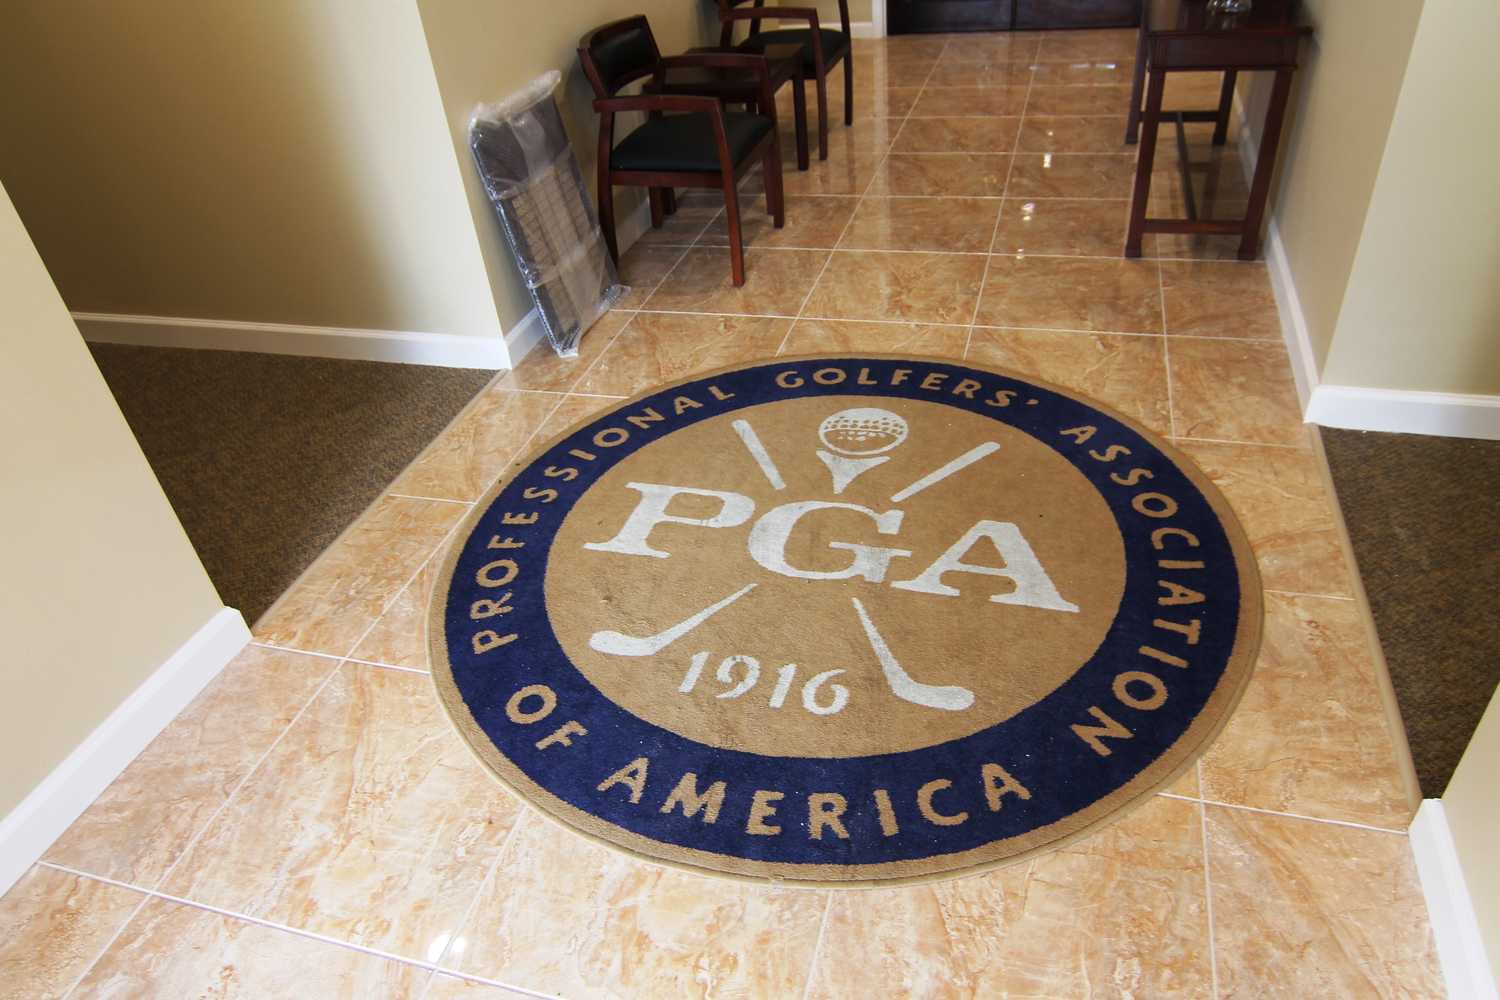 South Florida PGA Corporate Headquarters